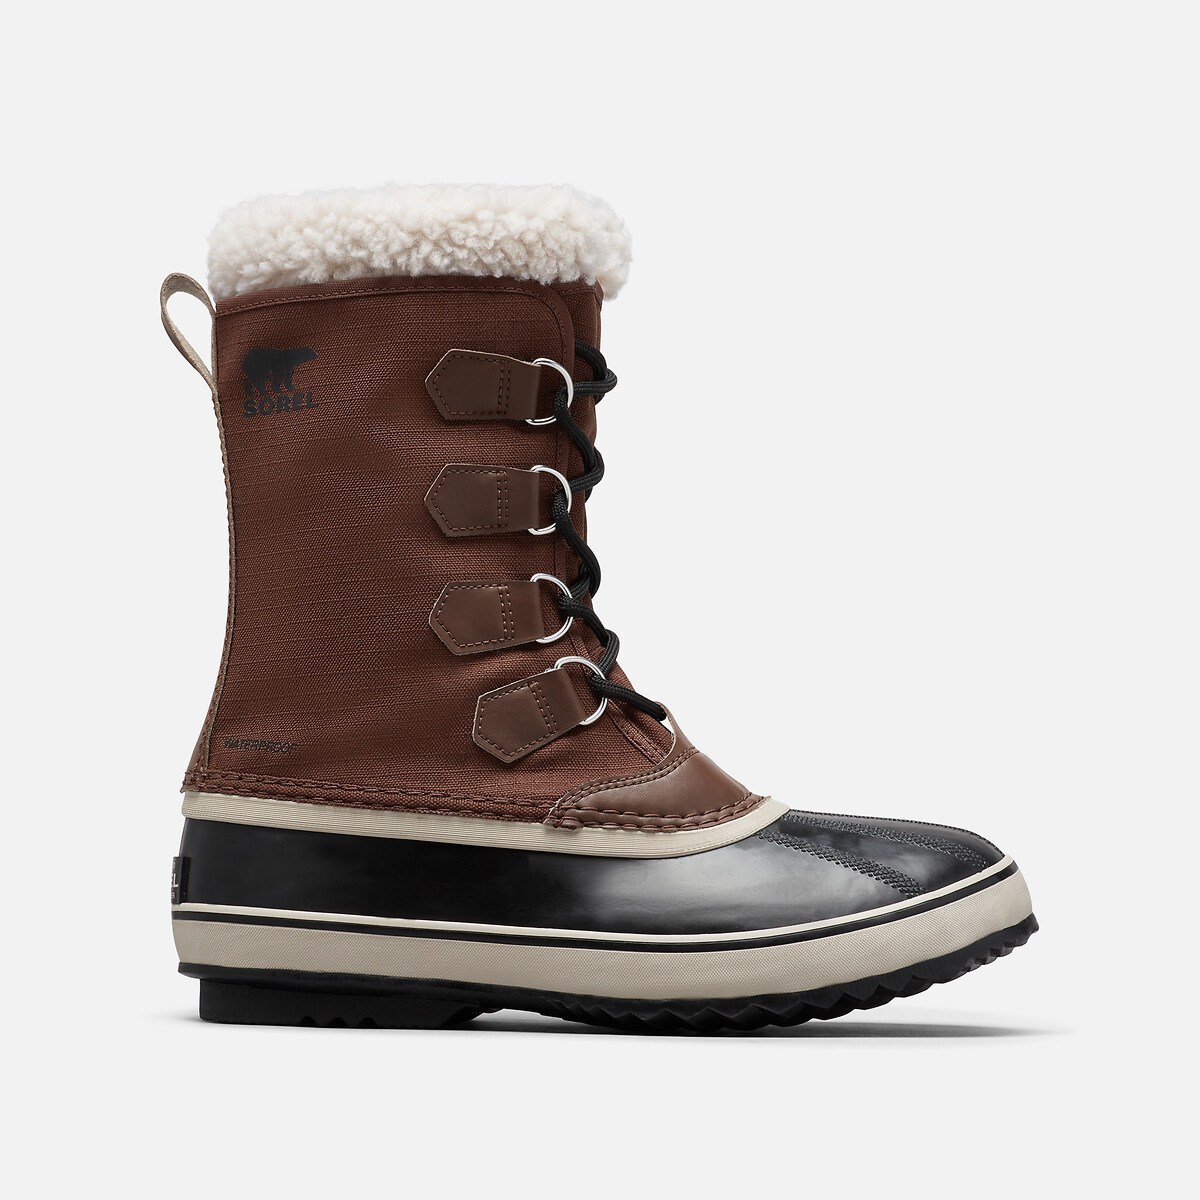 1964 Pac Nylon WP Snow Boots